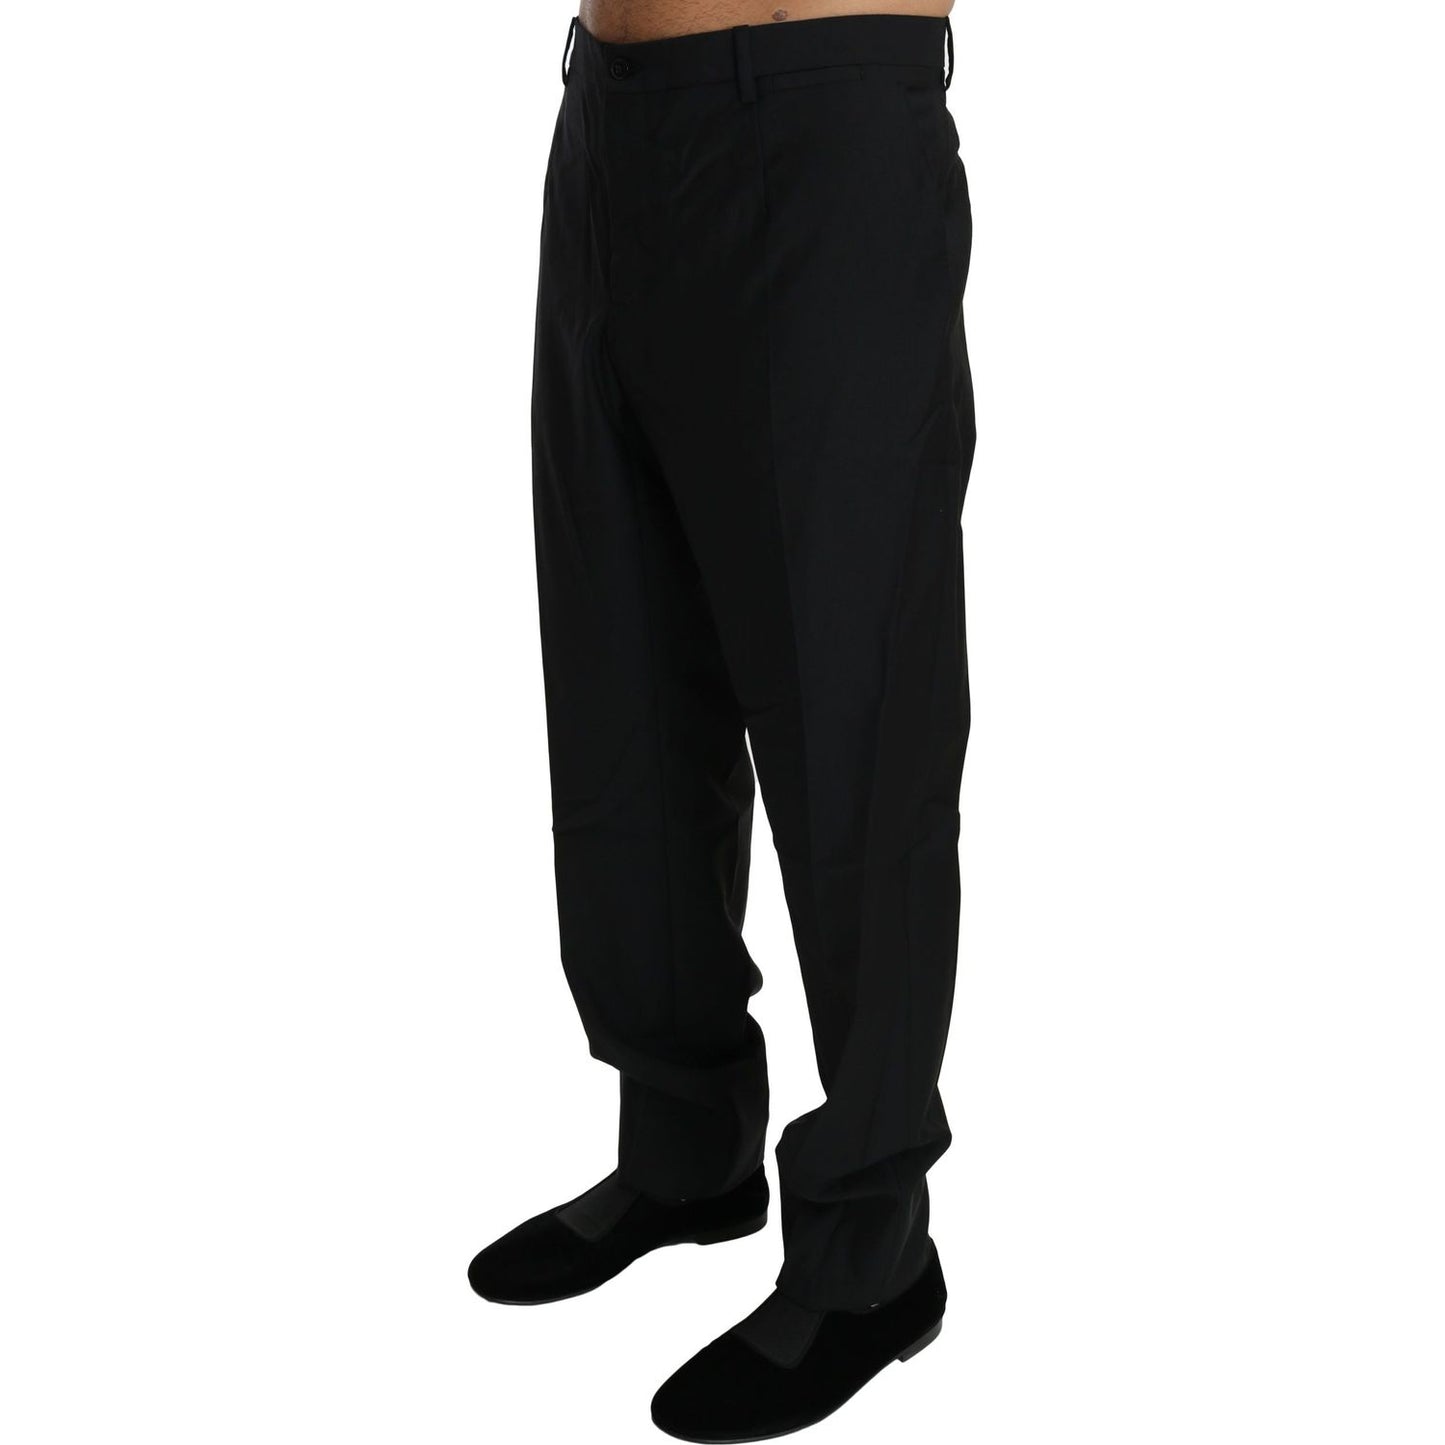 Dolce & Gabbana Elegant Black Virgin Wool Dress Pants Jeans & Pants black-dress-formal-trouser-men-wool-pants IMG_1229-1-scaled-d77f6fa9-449.jpg